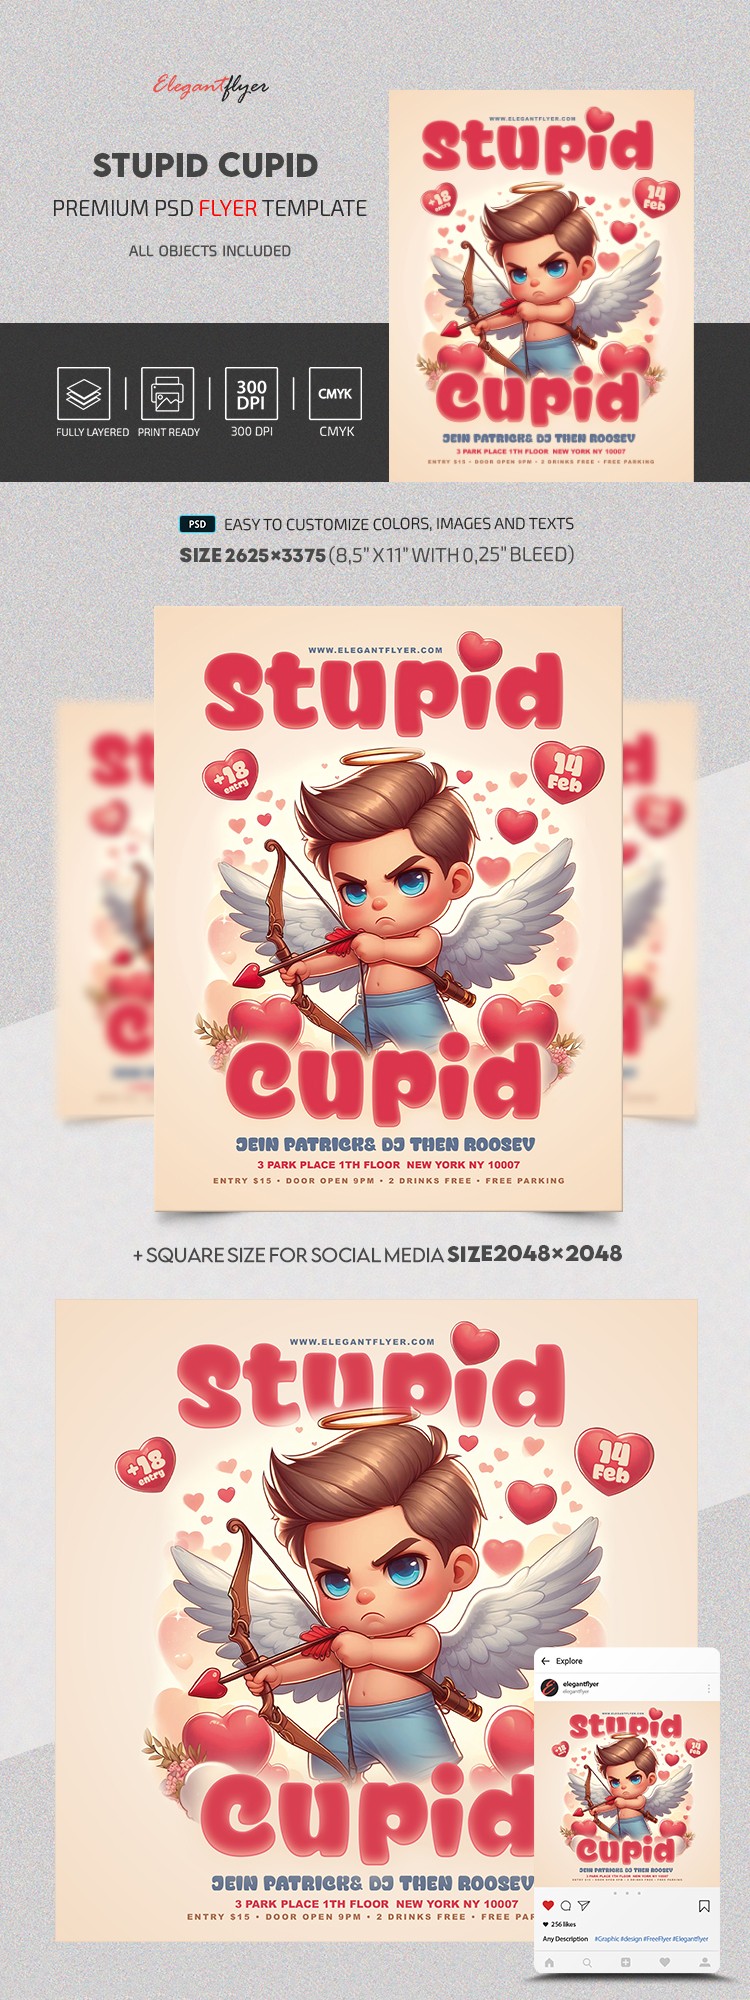 Stupid Cupid by ElegantFlyer